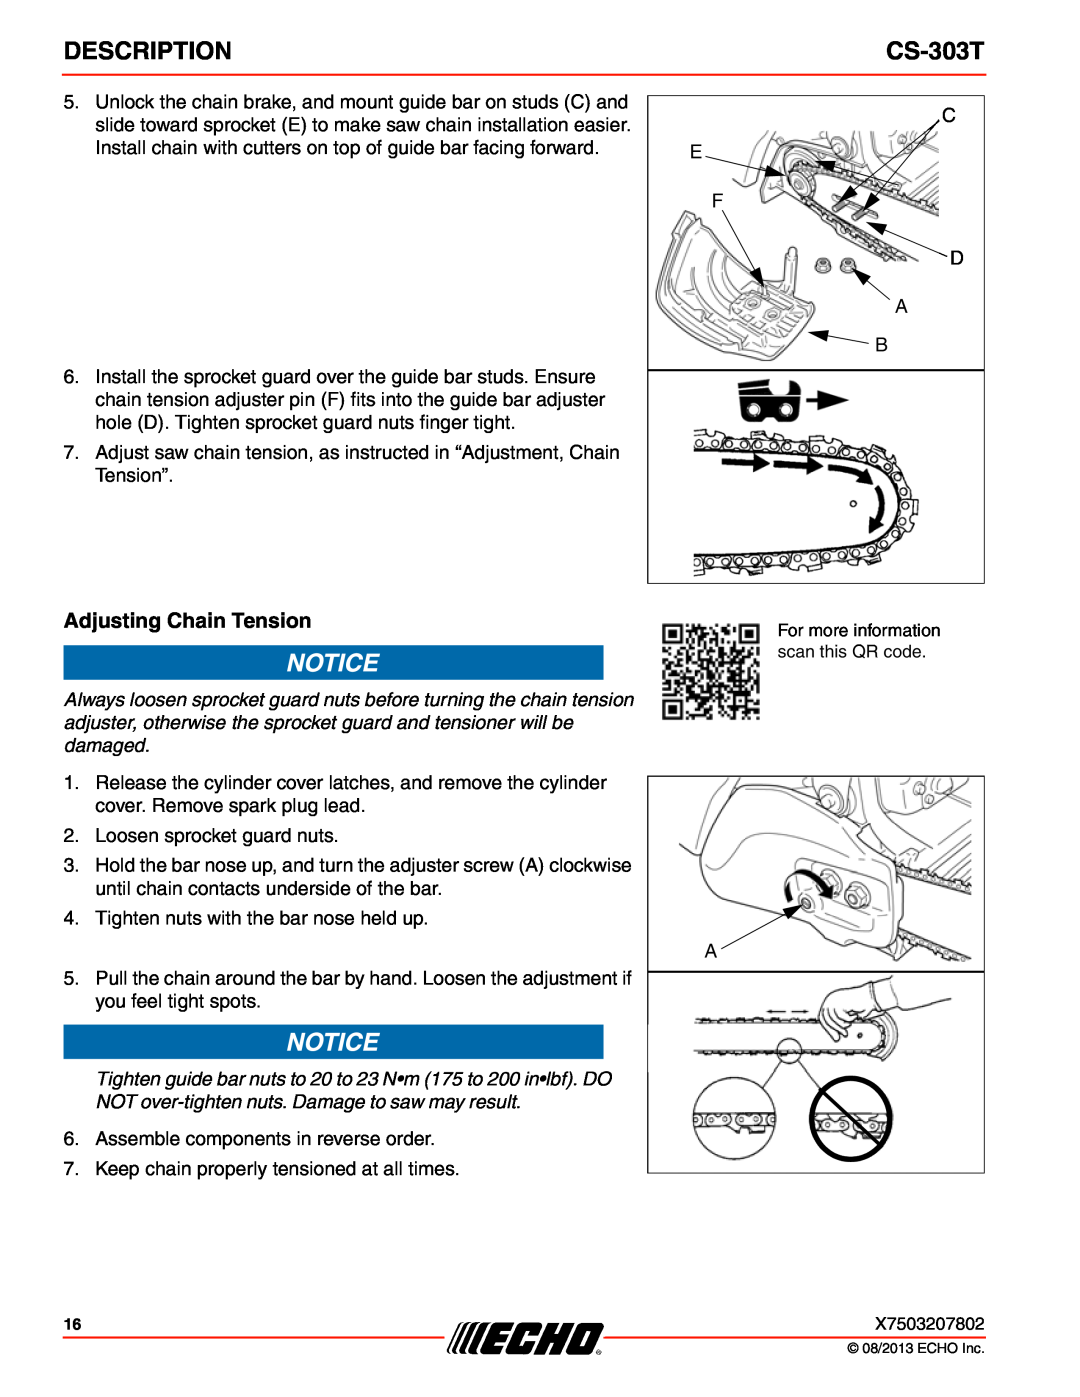 Echo CS-303T instruction manual Adjusting Chain Tension, Description 